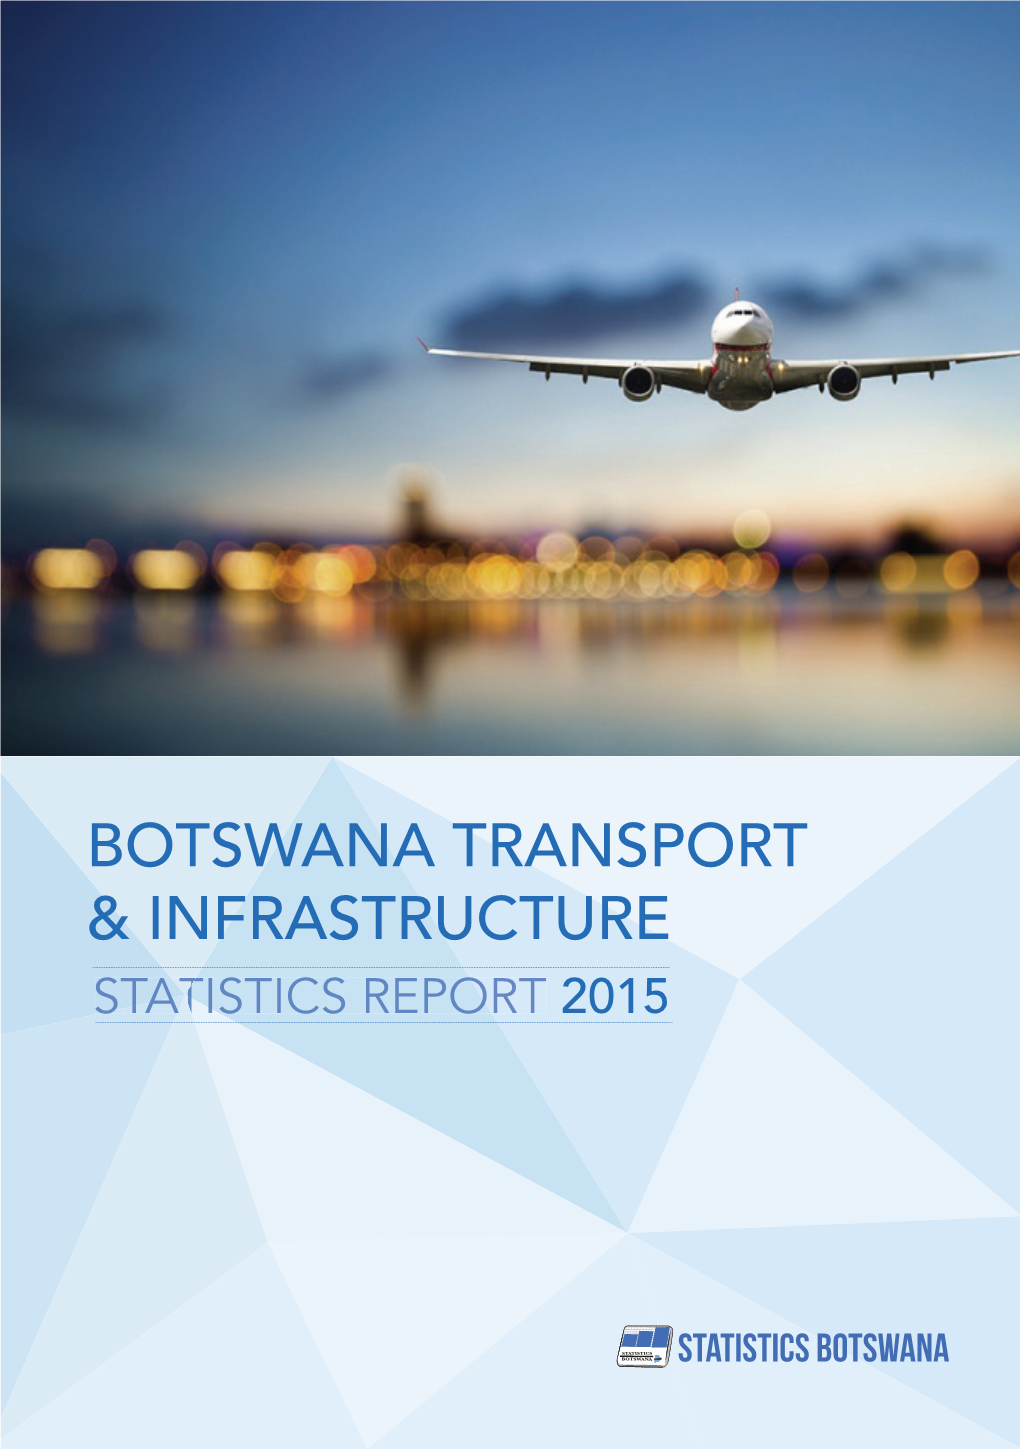 Botswana Transport & Infrastructure Statistics Report 2015